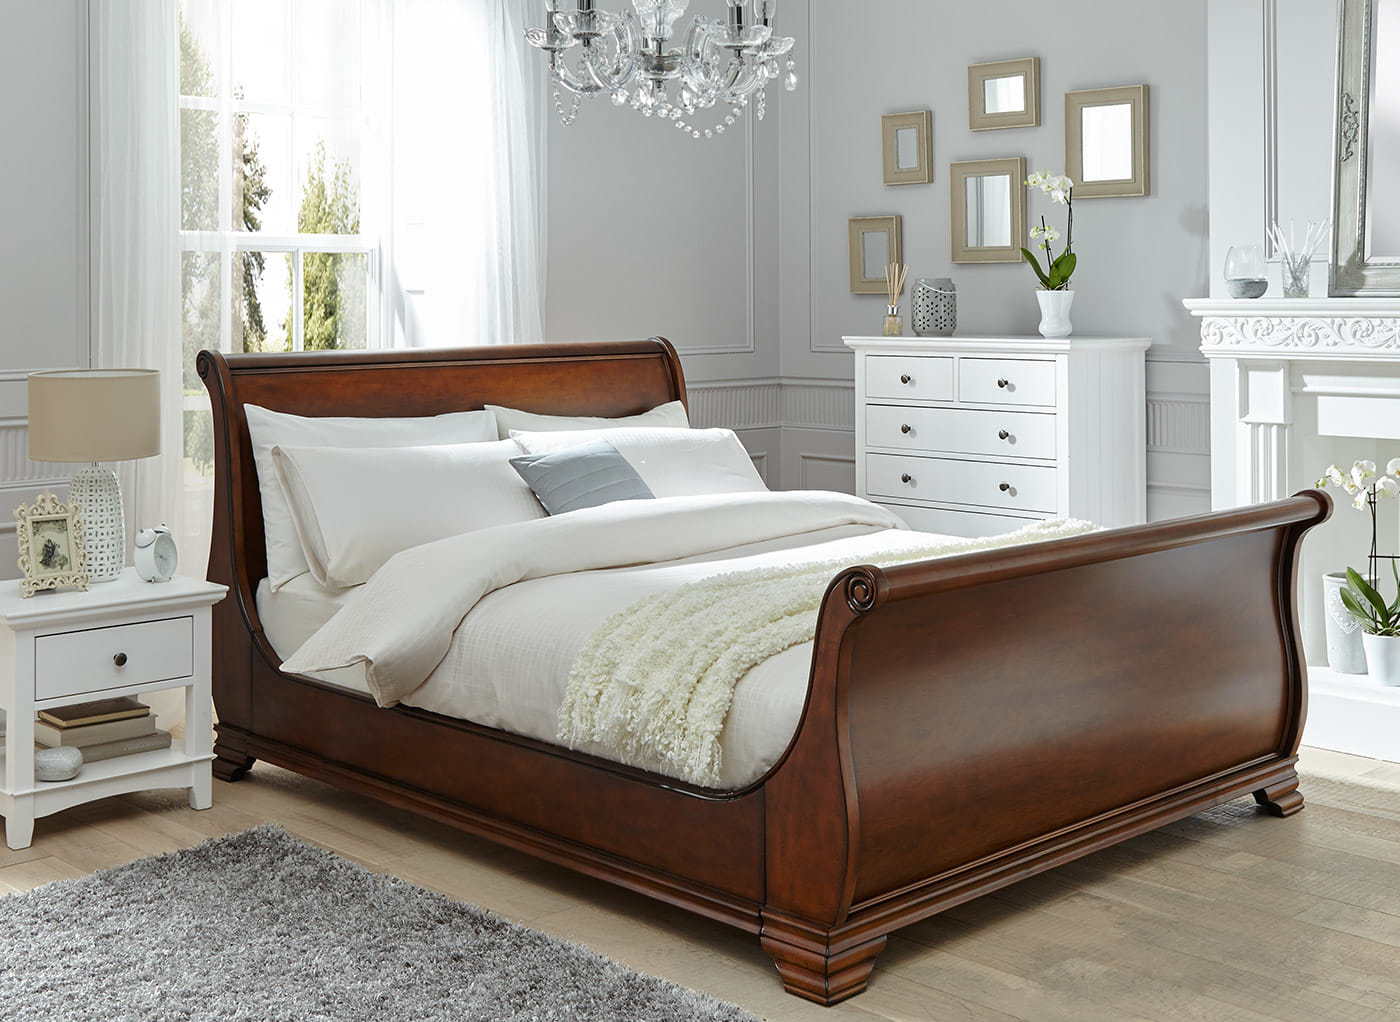 wooden beds orleans walnut wooden bed frame SHCWDKC